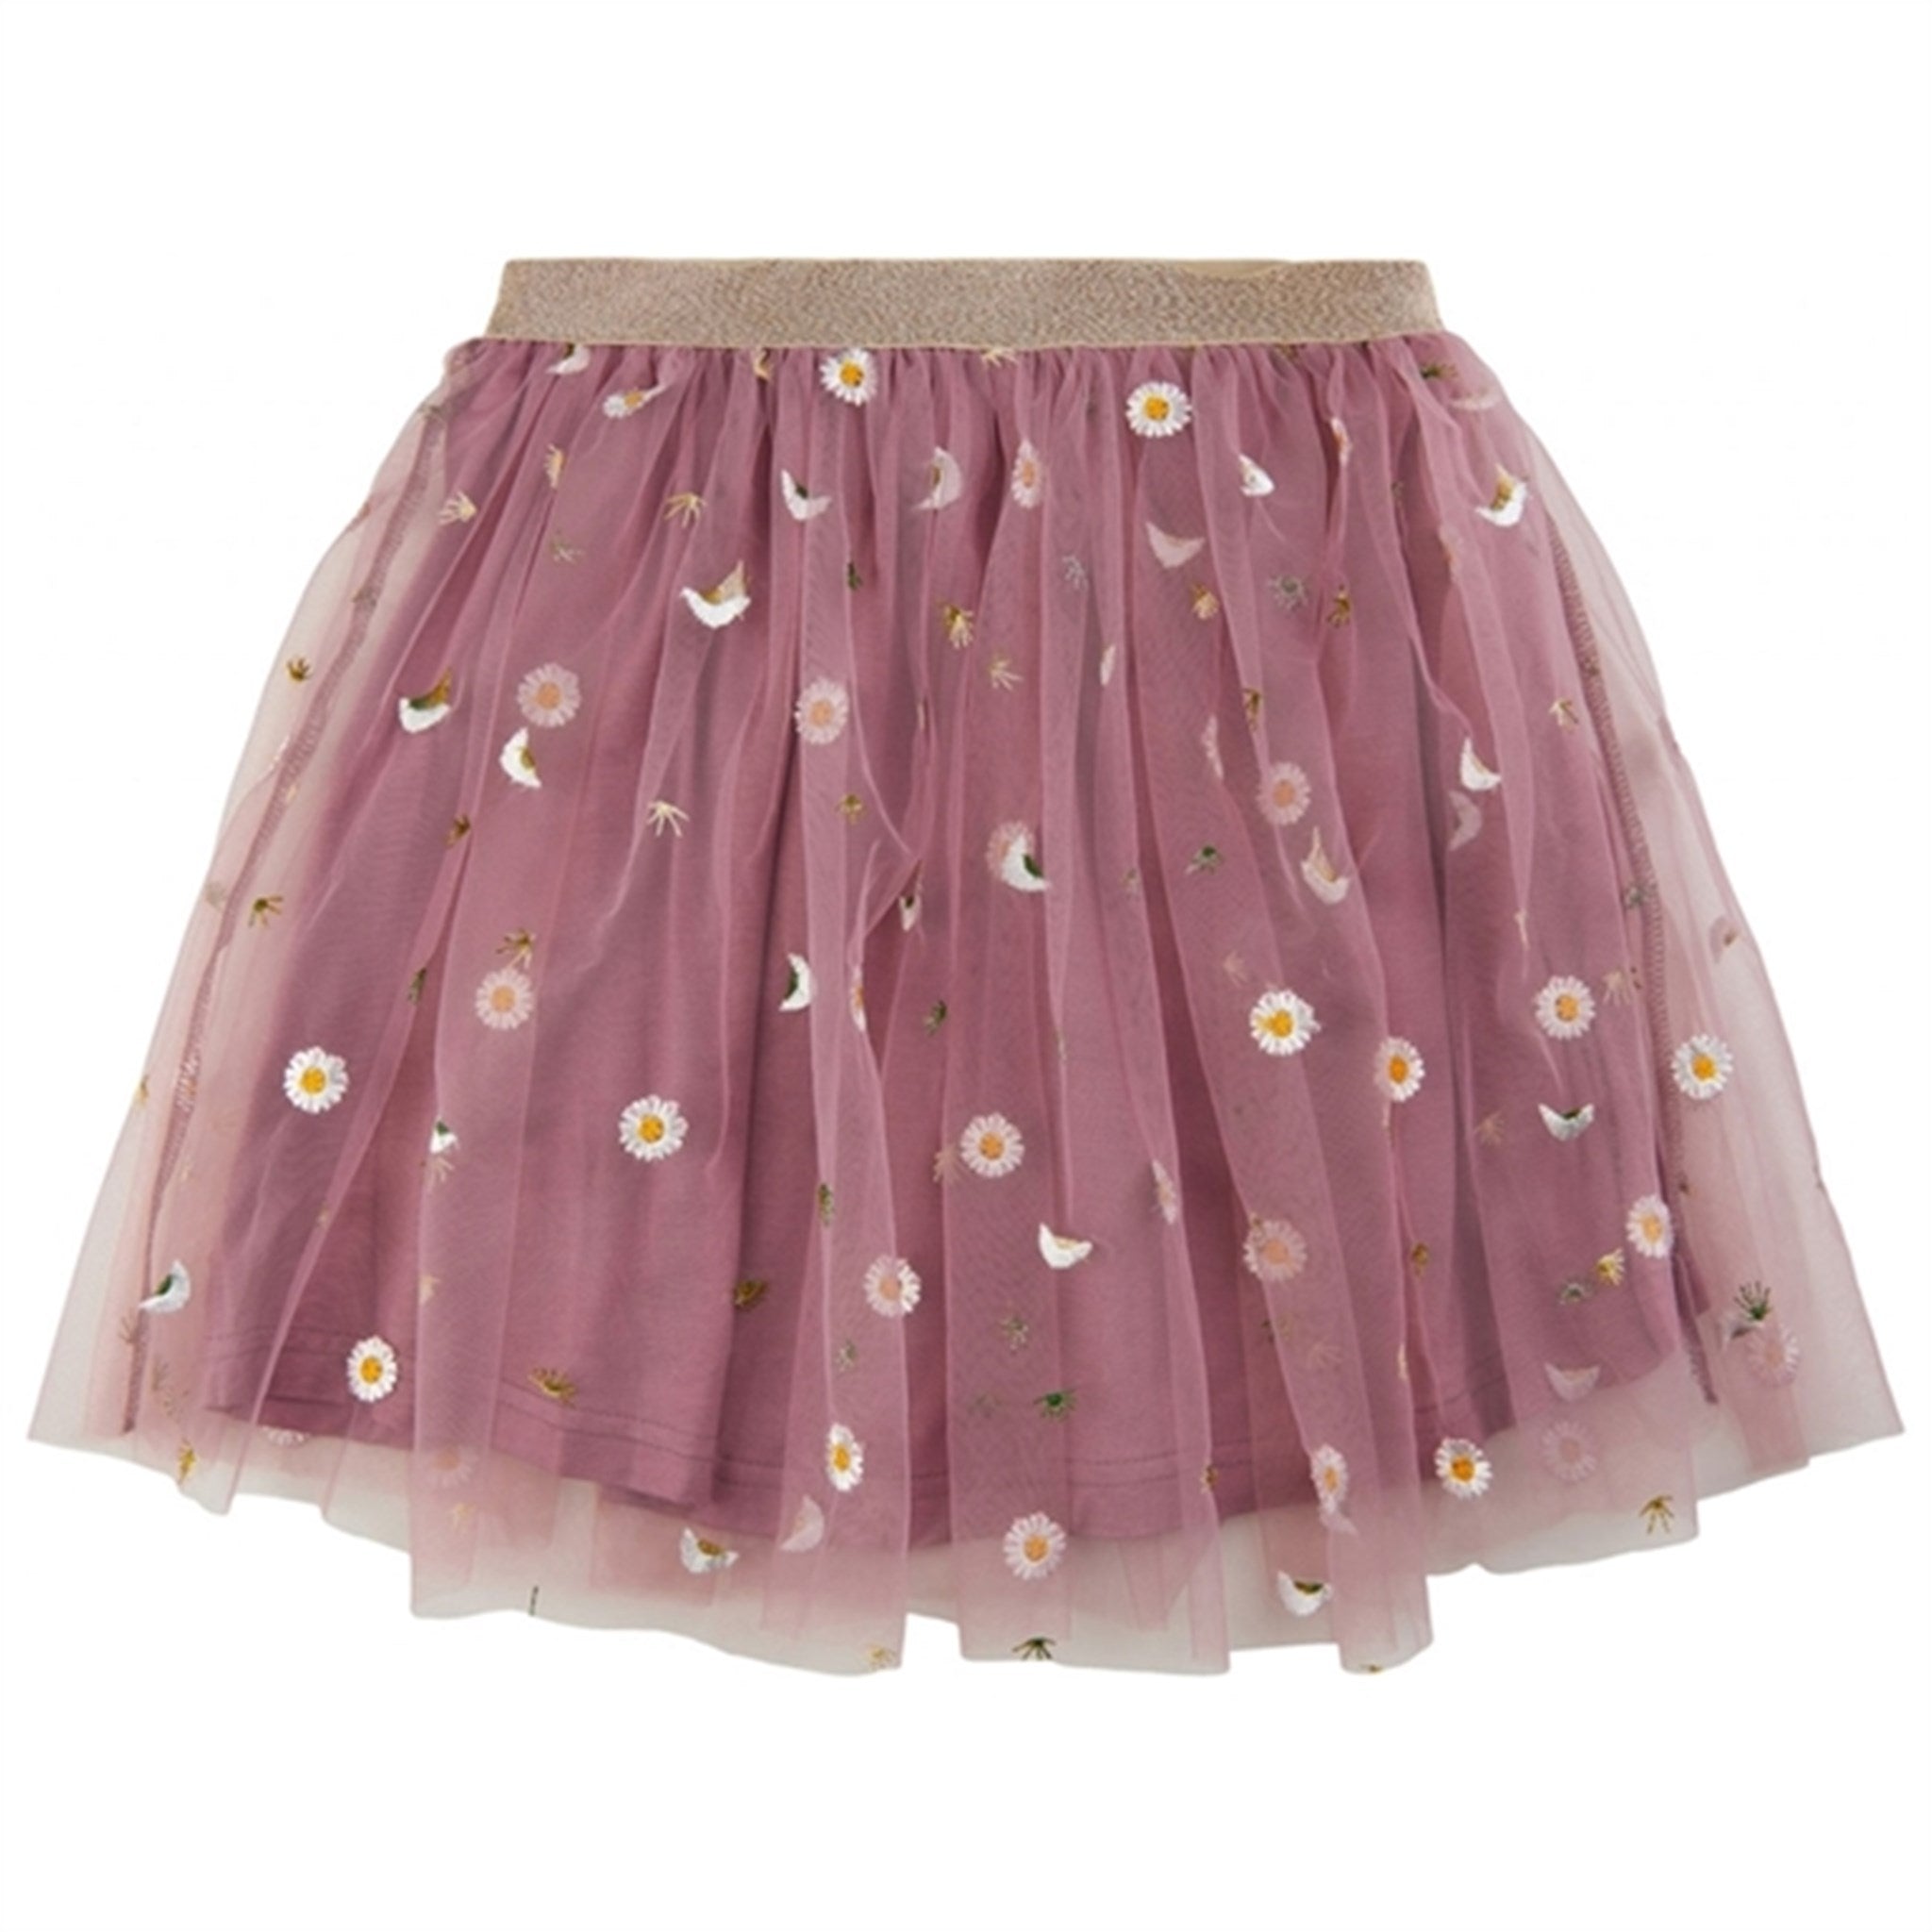 The New Lilas Bolette Skirt